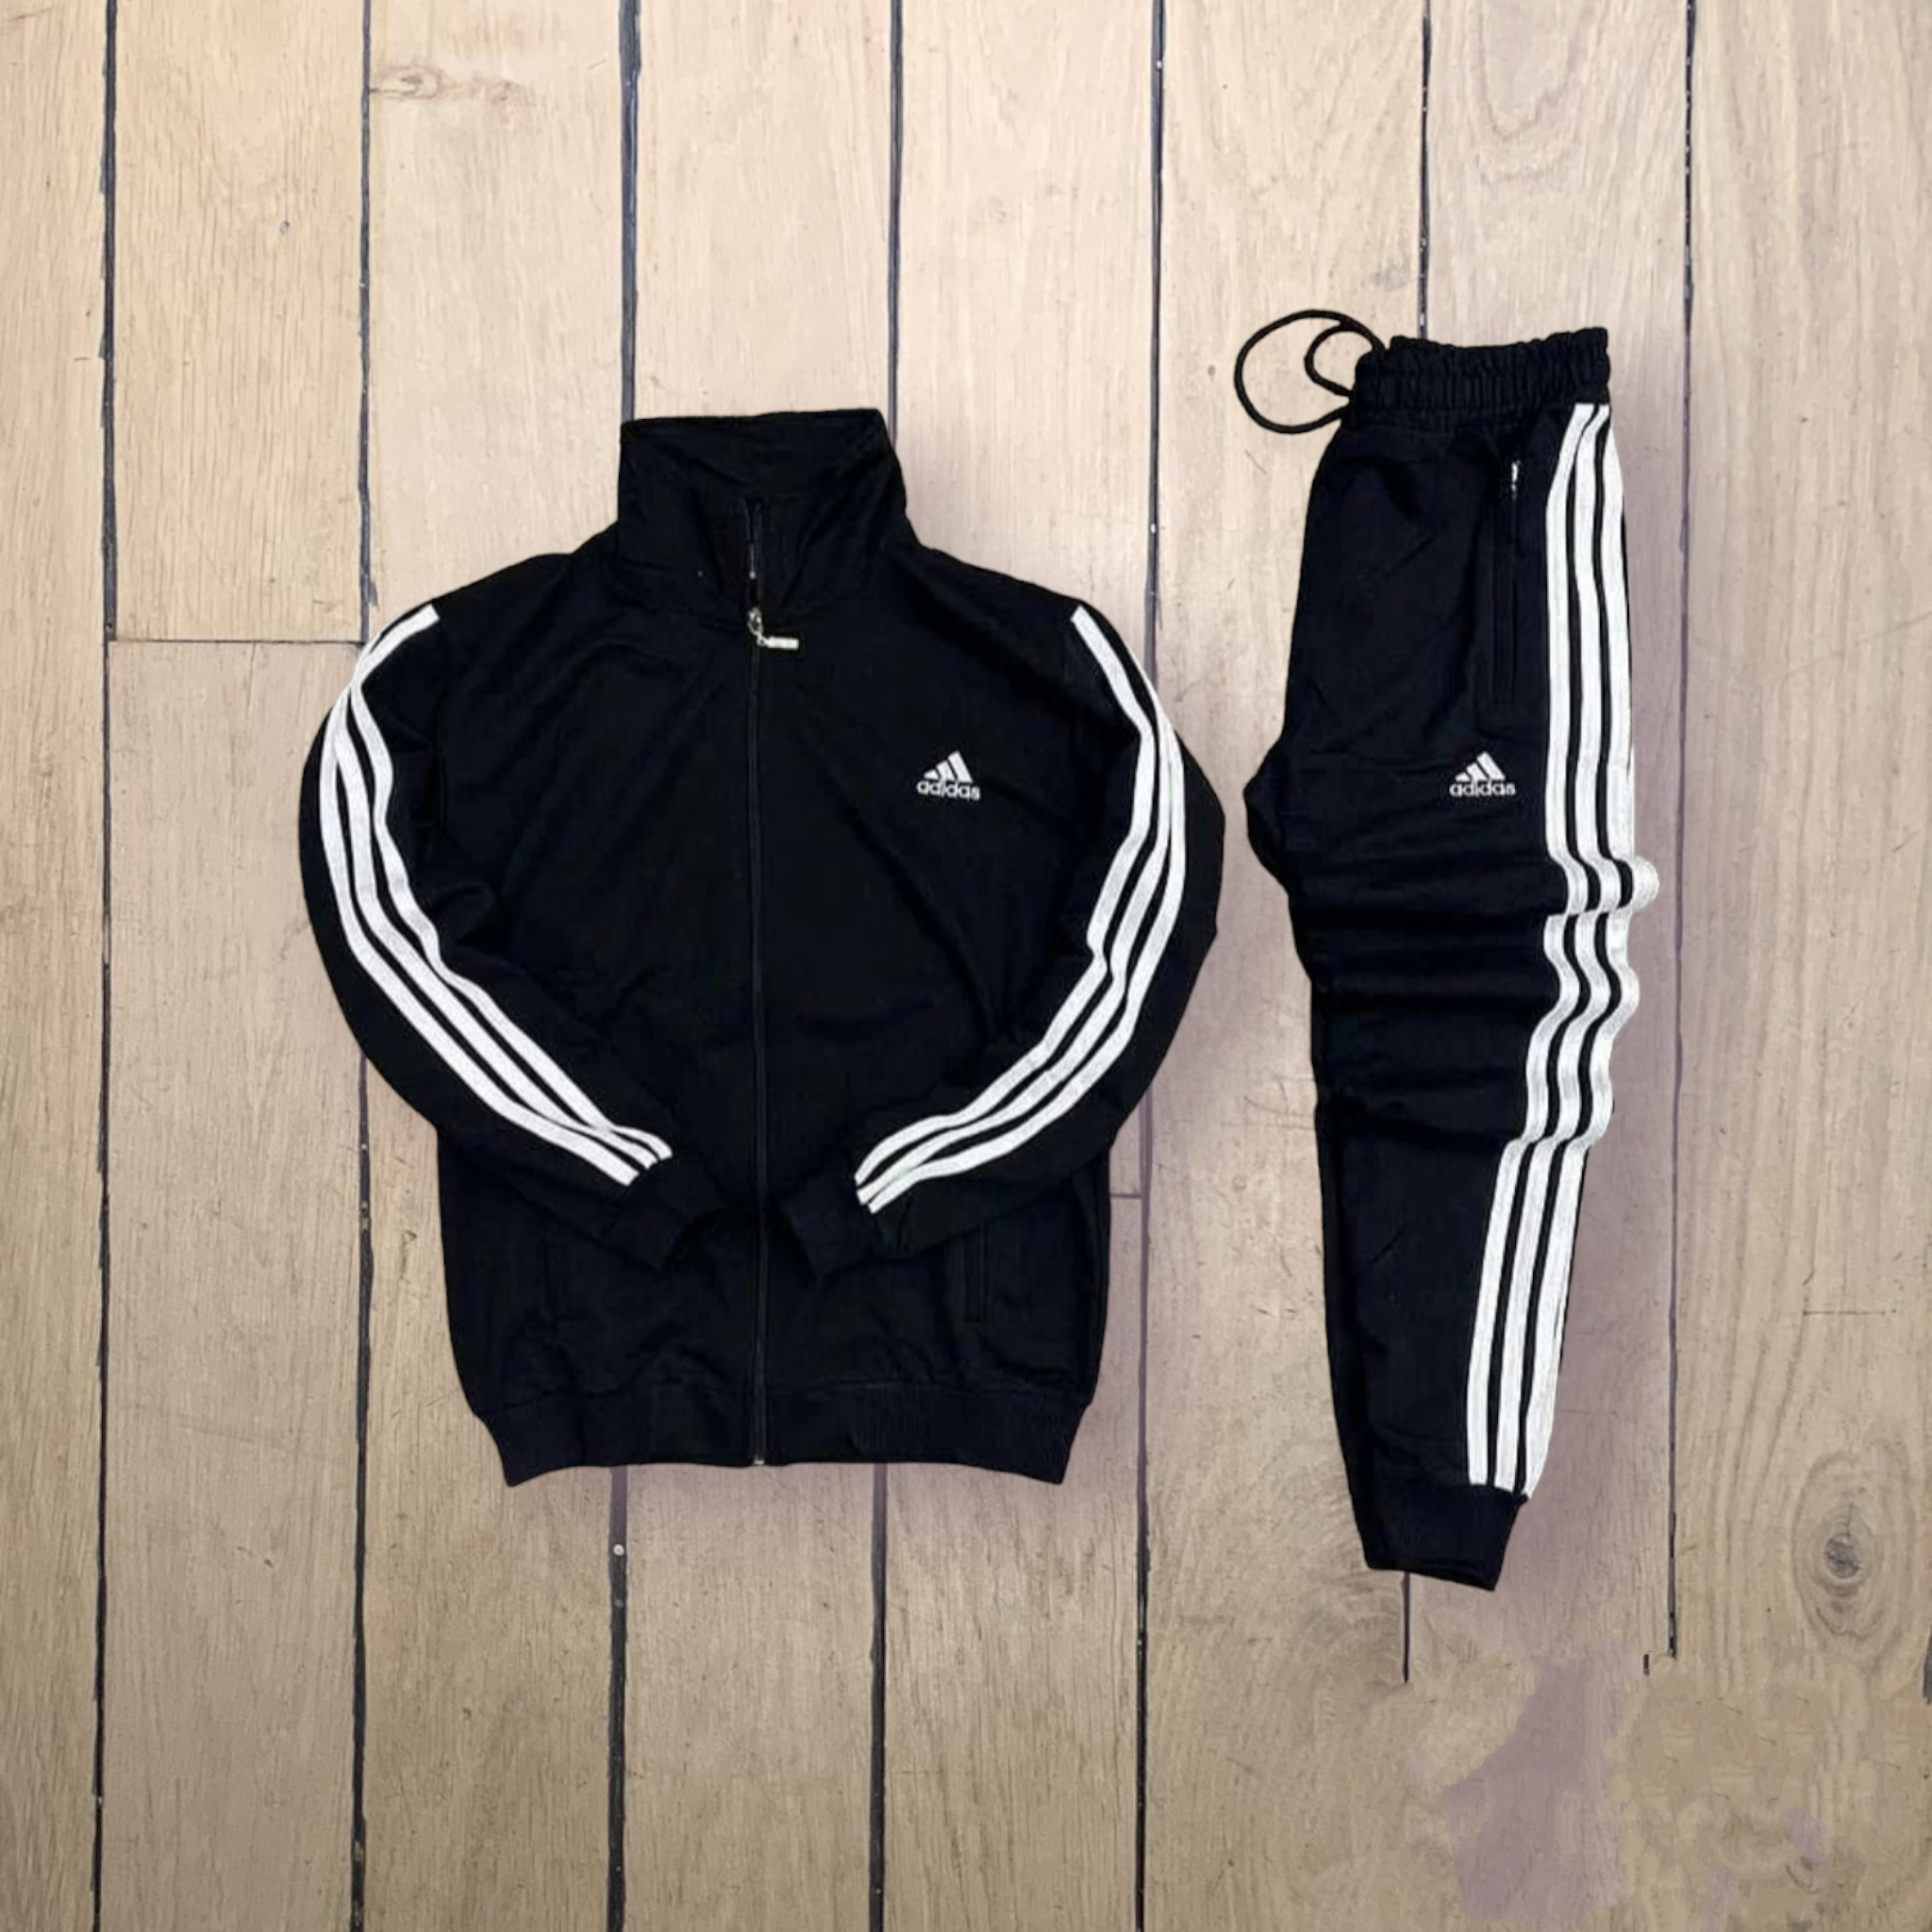 Adidas 3-Stripe Track Suit Mens Large Black White Jacket Pants | eBay